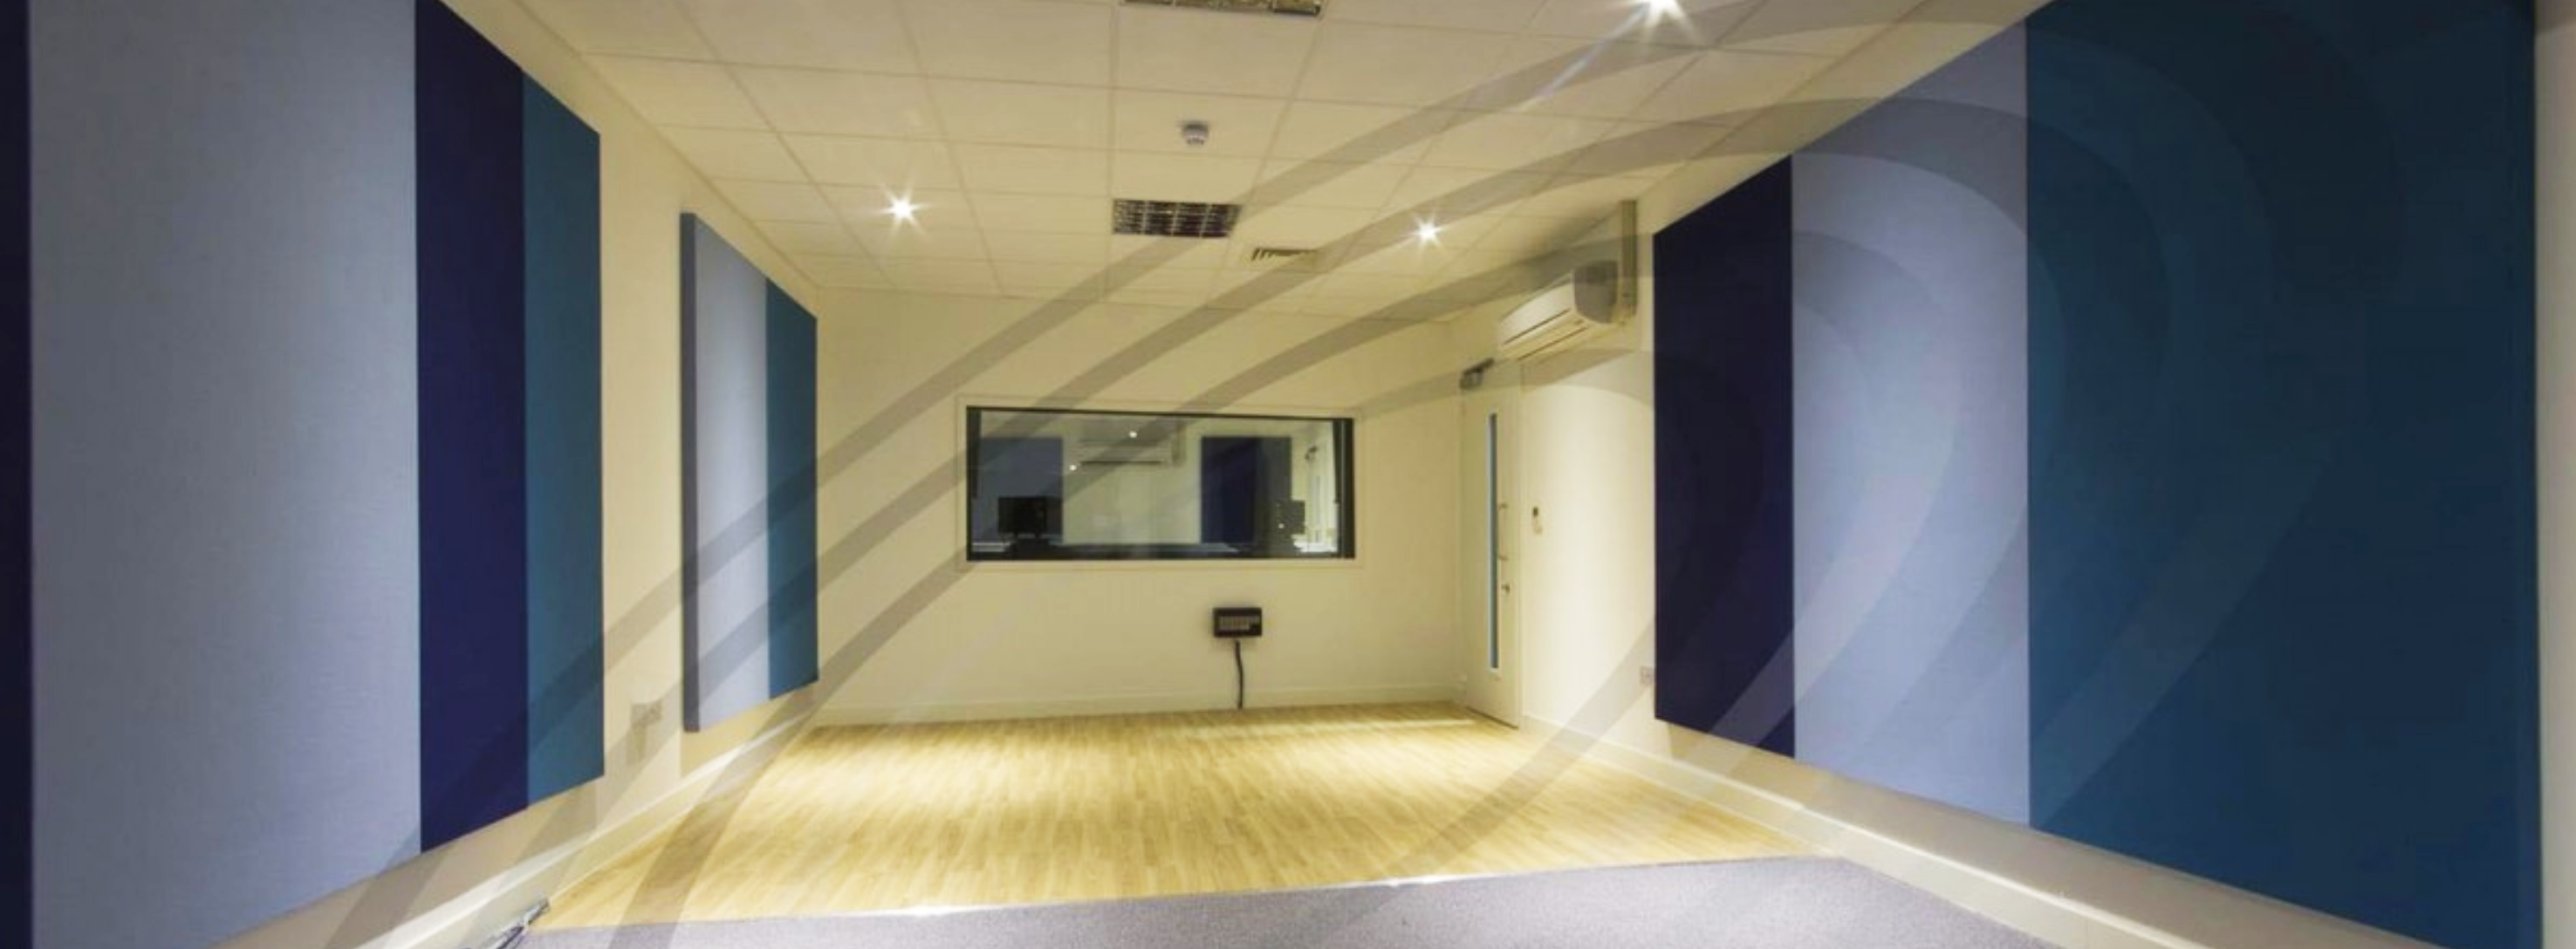 Soundproof room